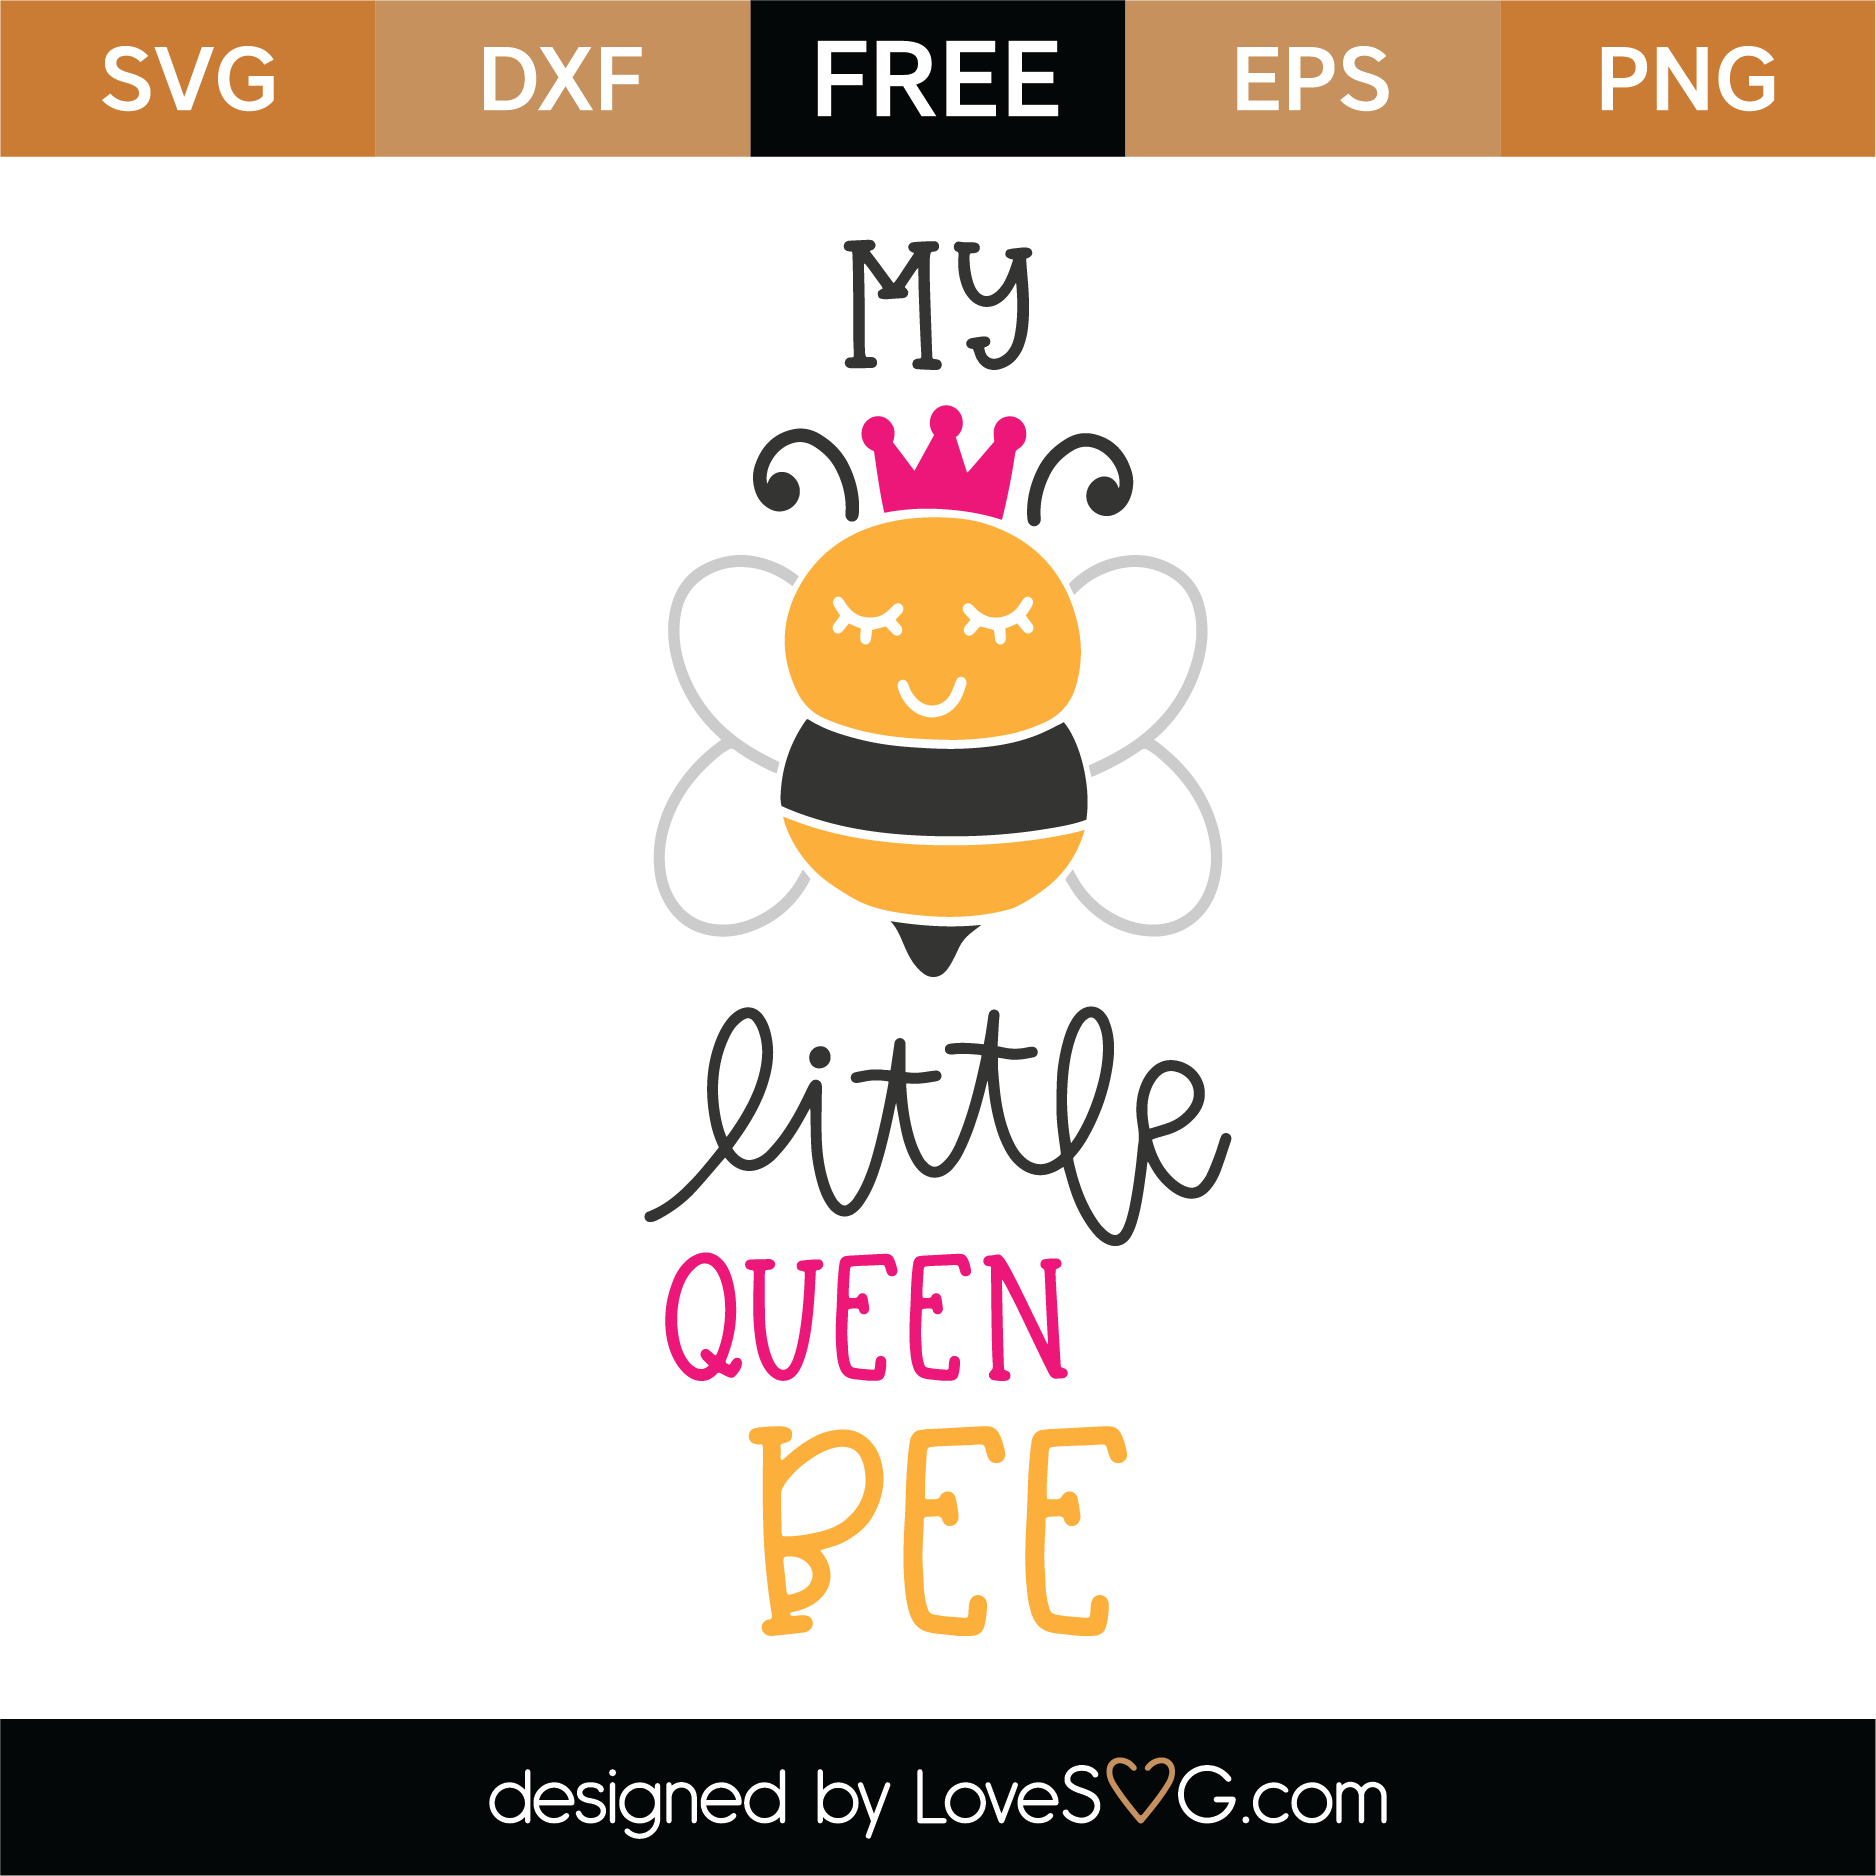 Free My Little Queen Bee SVG Cut File | Lovesvg.com